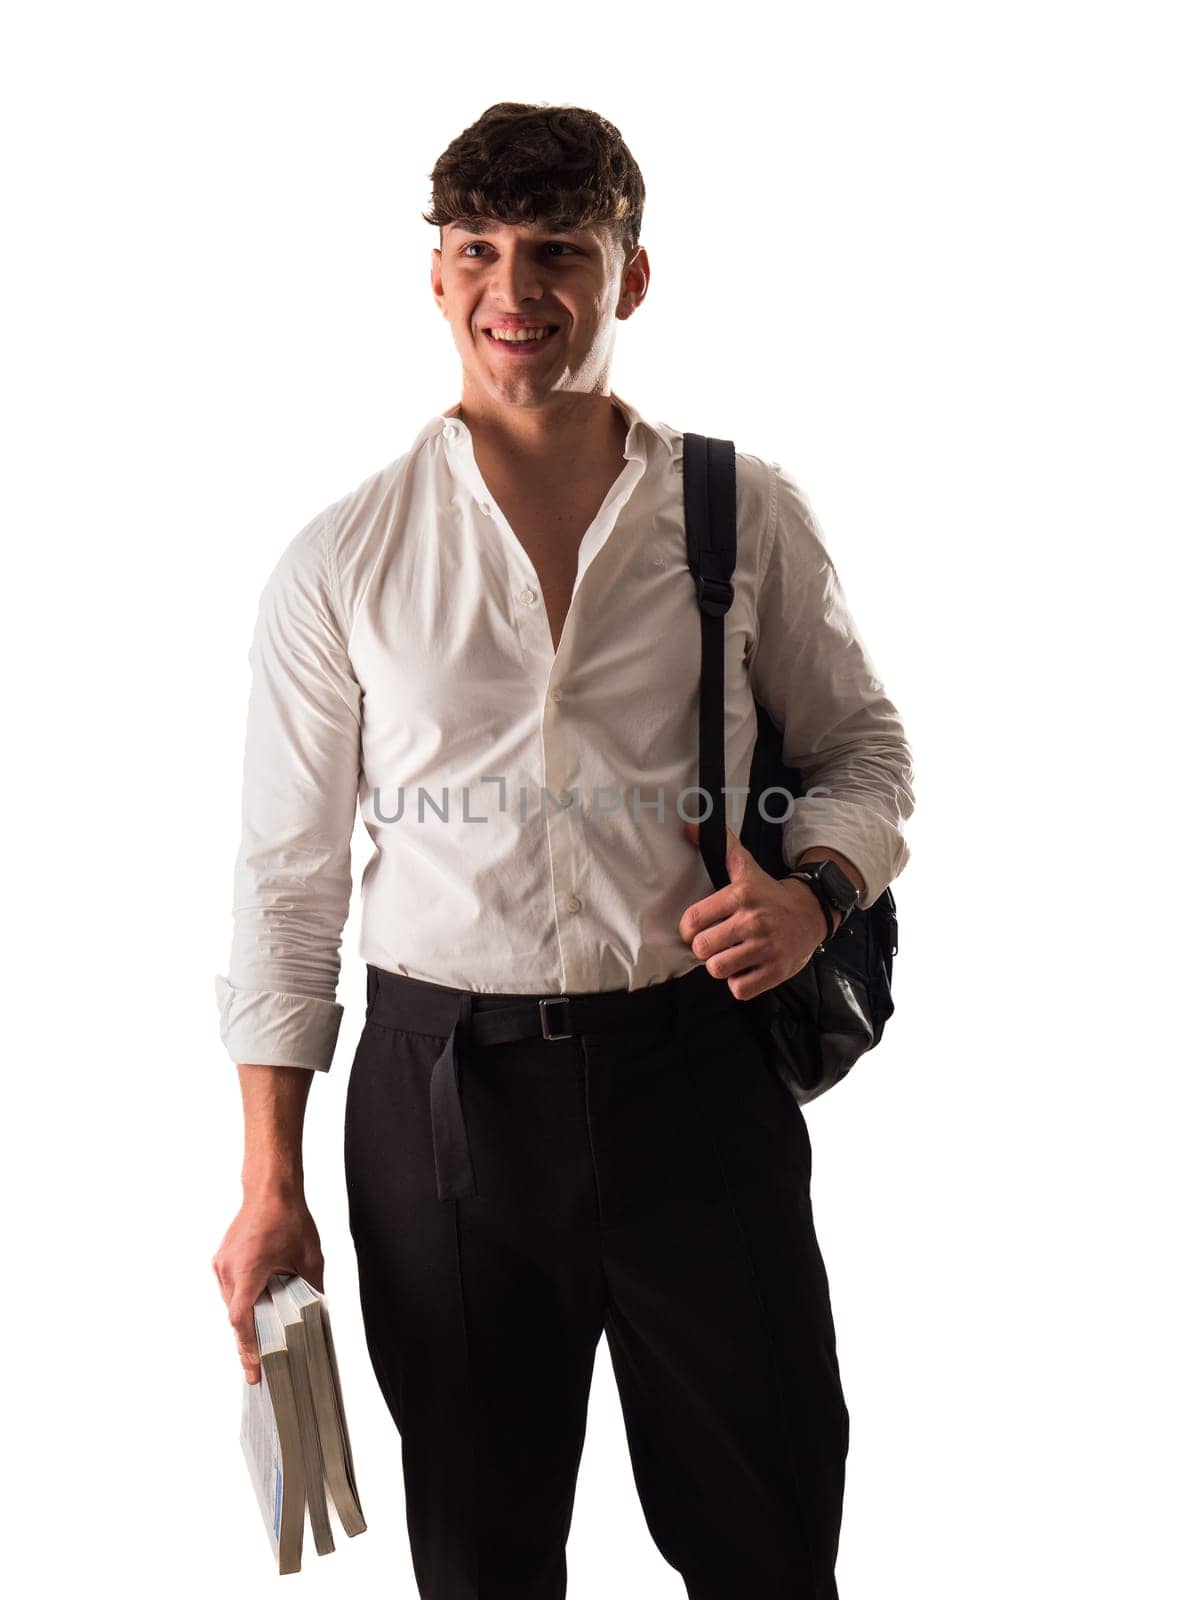 A Dapper Gentleman in Crisp White Shirt and Sleek Black Pants by artofphoto